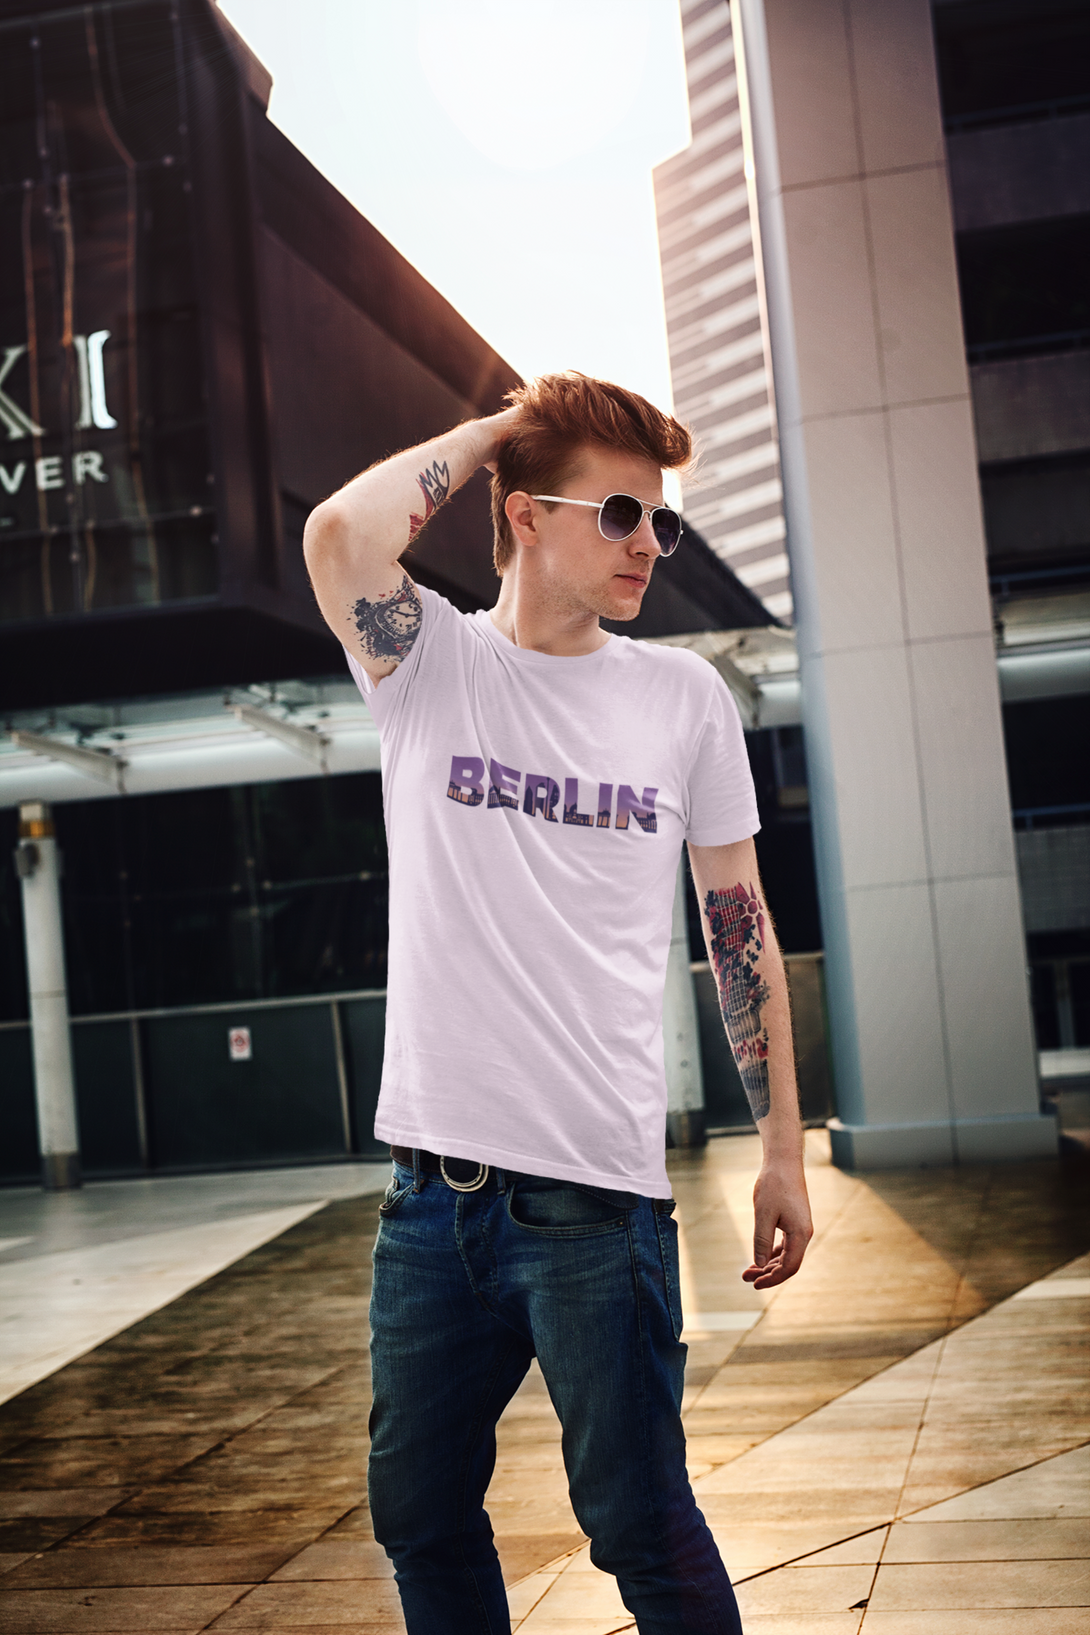 Berlin Skyline Printed T-Shirt For Men - WowWaves - 7